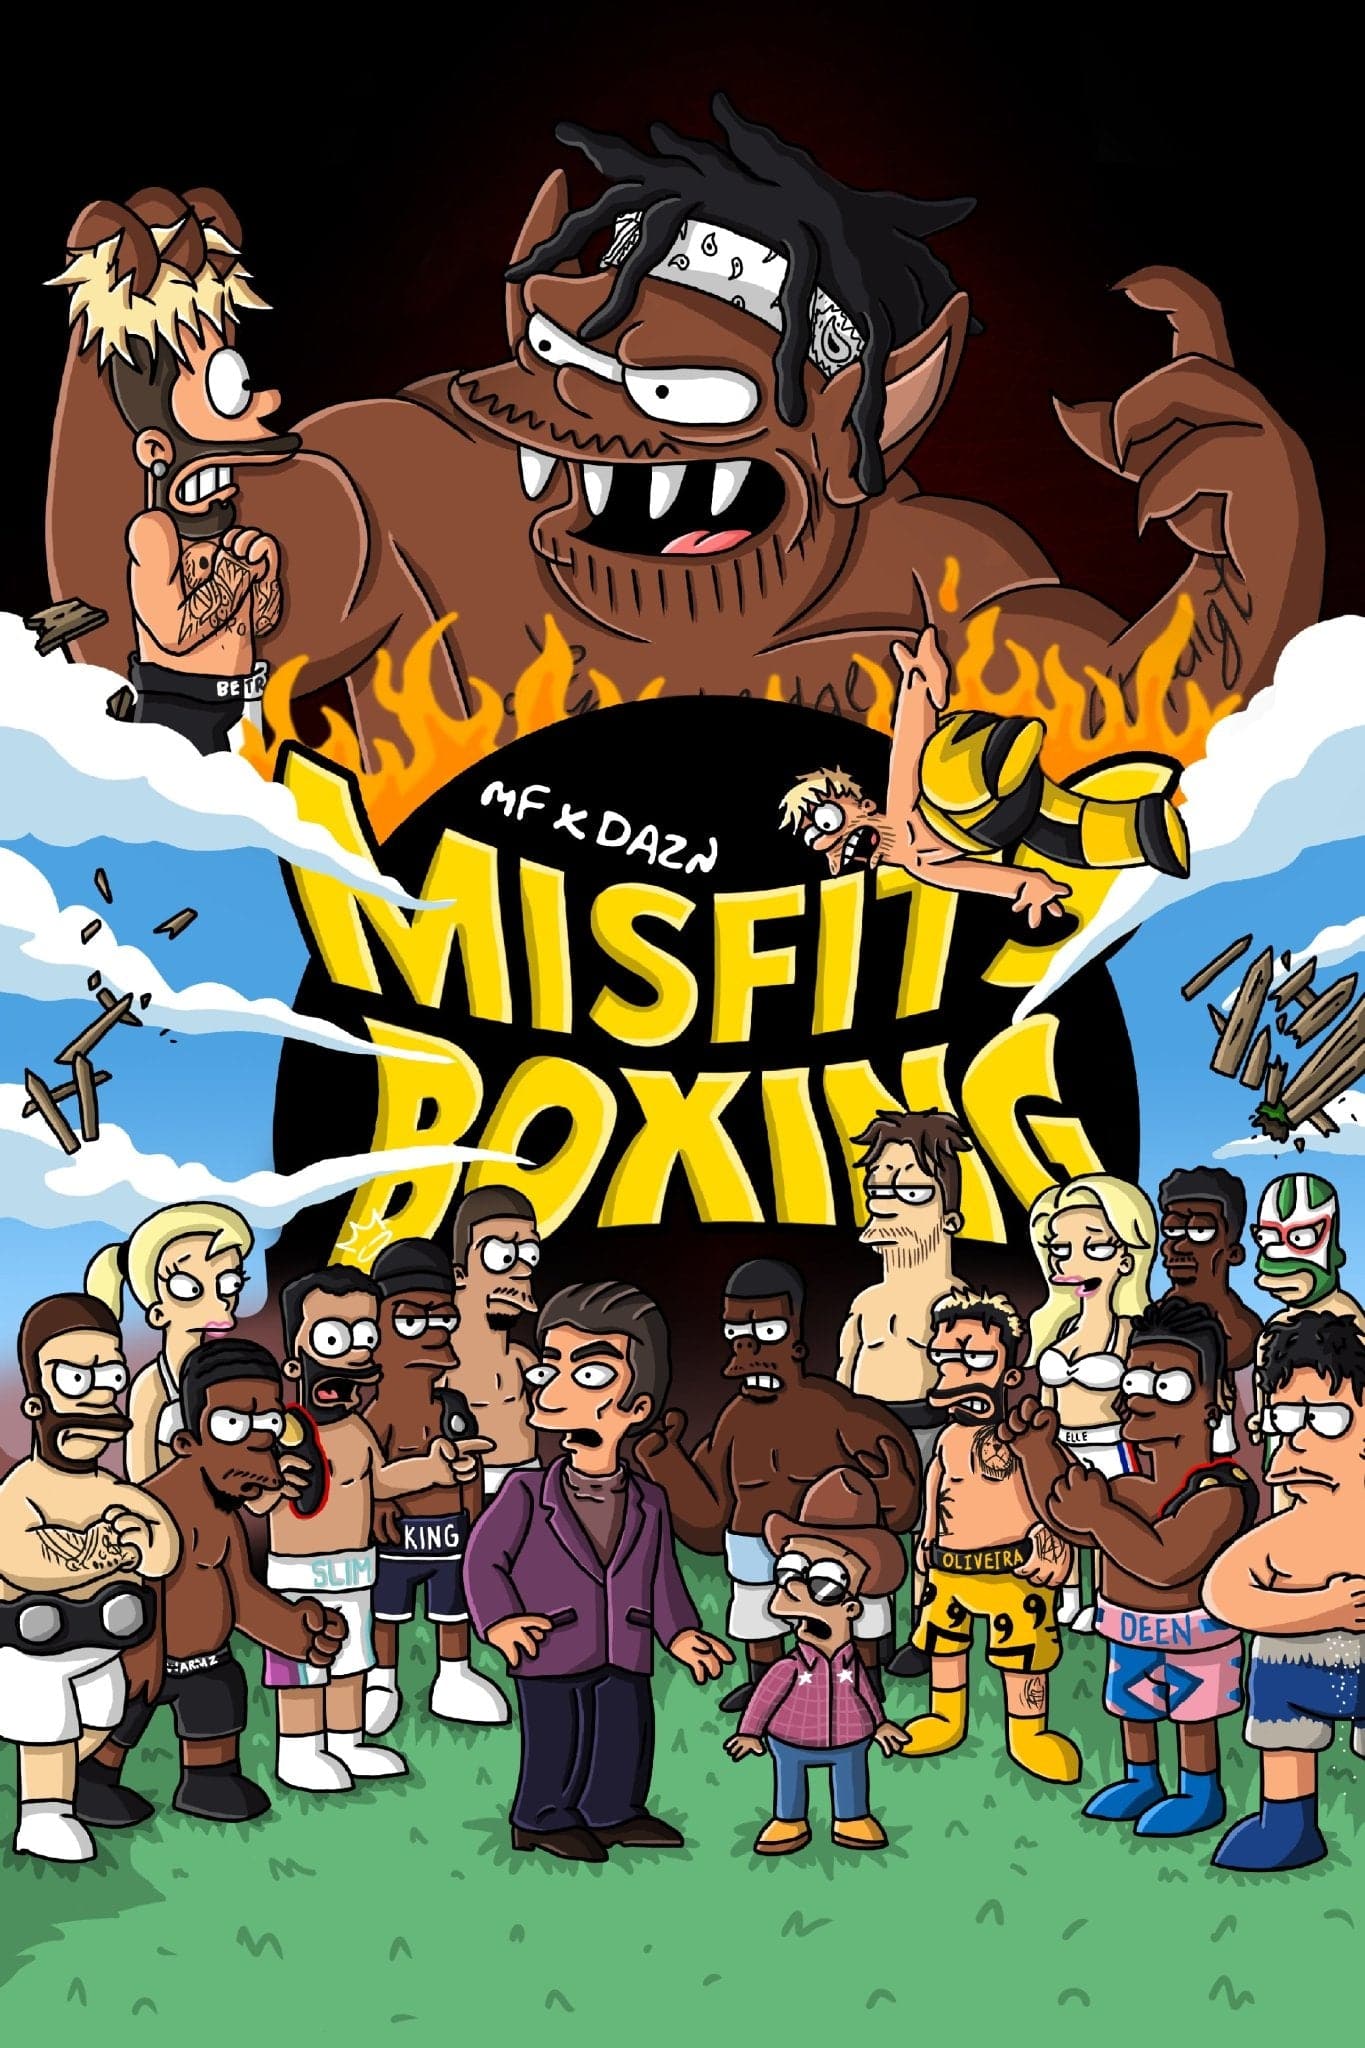 KSI 'Misfits Boxing Cartoon' Poster - Posters Plug